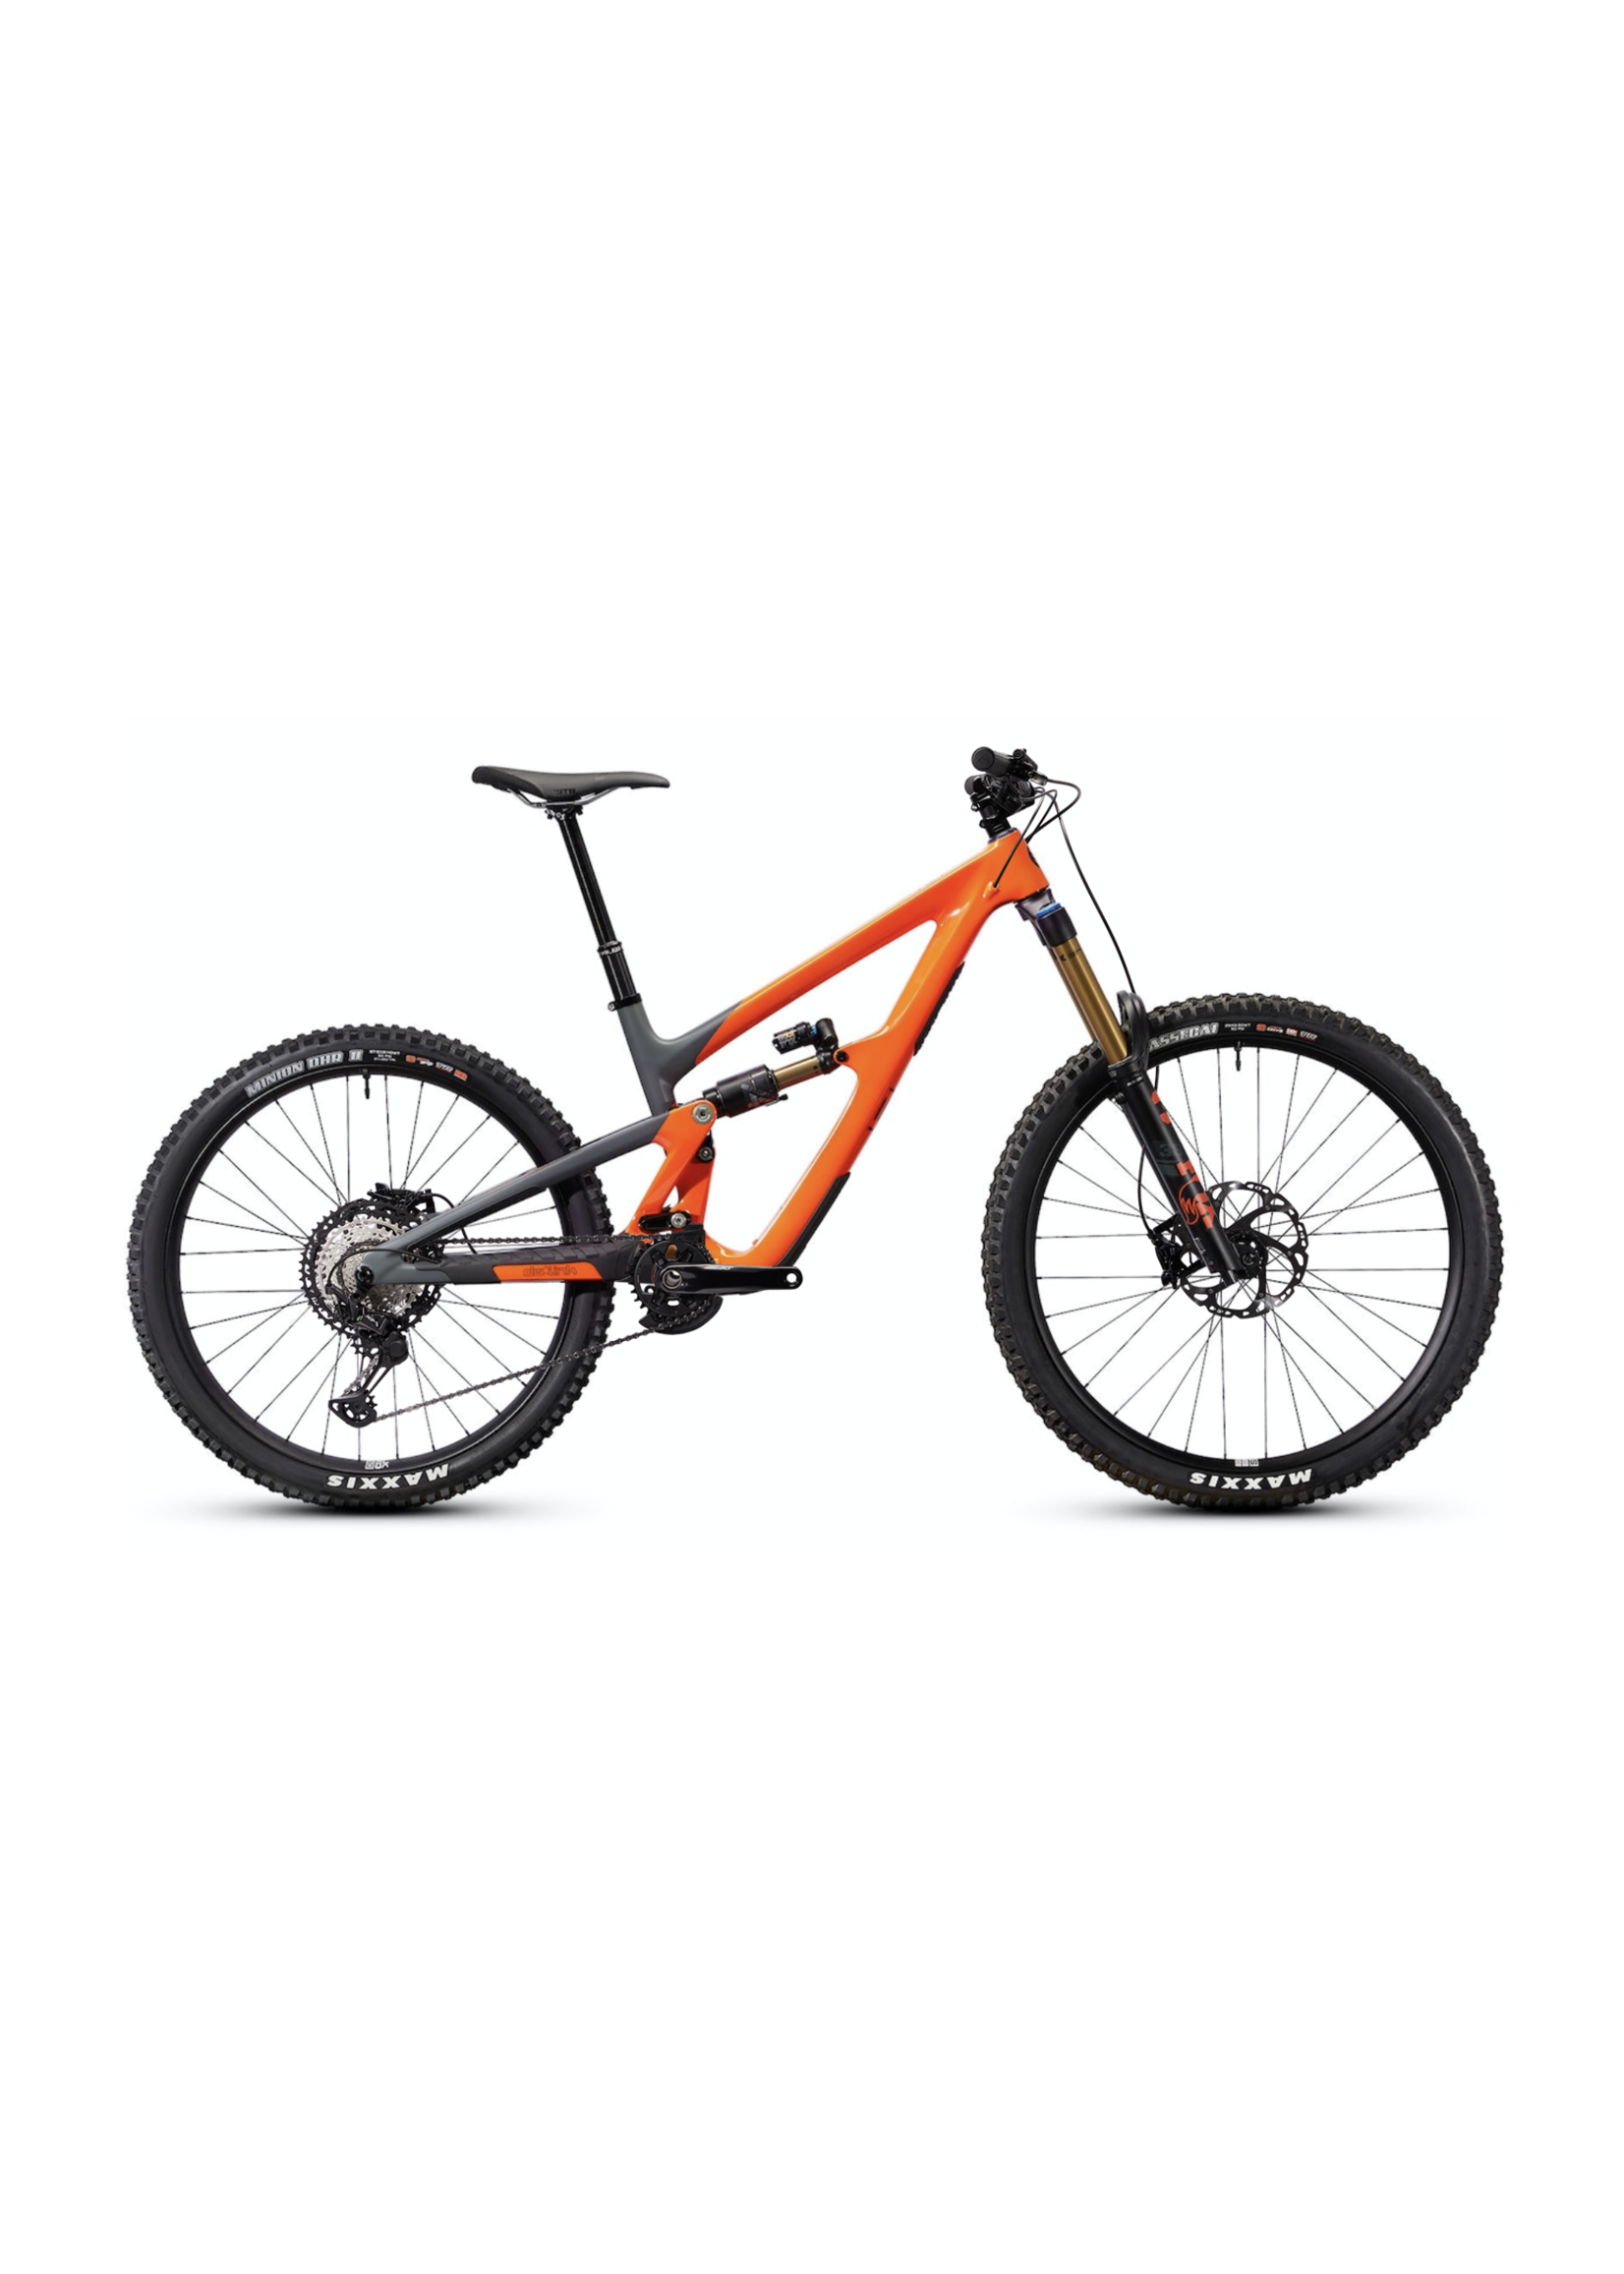 IBIS IBIS HD6 Enduro bike, GX Builds starting at $6099, *Contact the shop to customize you HD6*